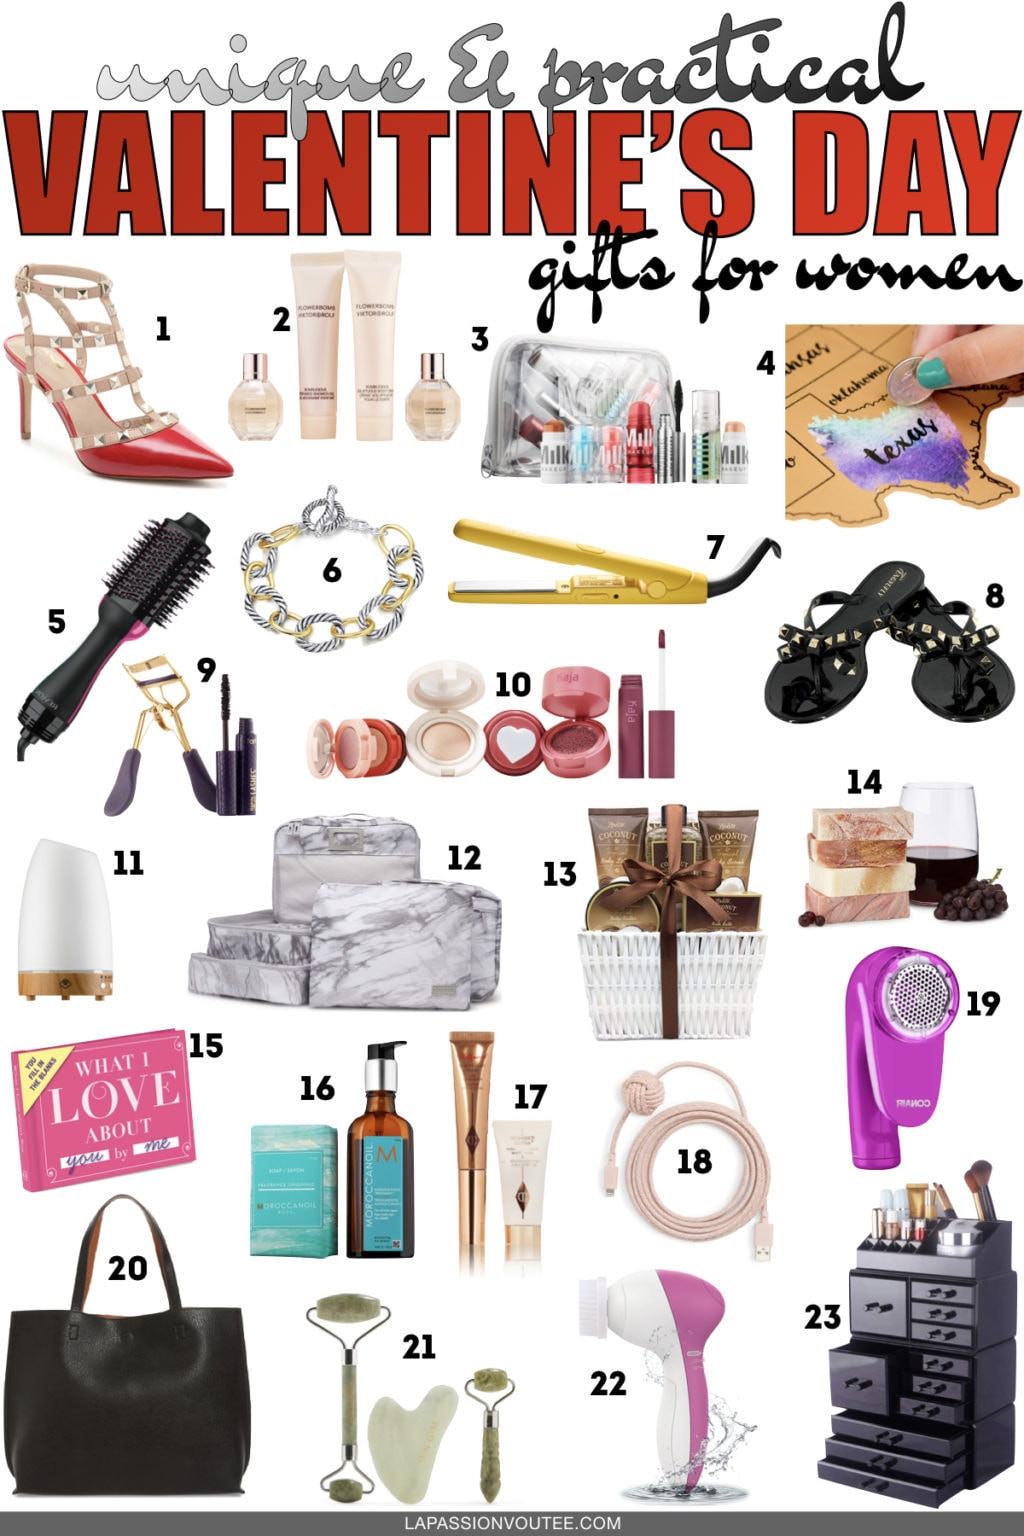 Top Gift Ideas For Valentines Day
 55 Best Valentine s Day Gift Ideas for Women Under $50